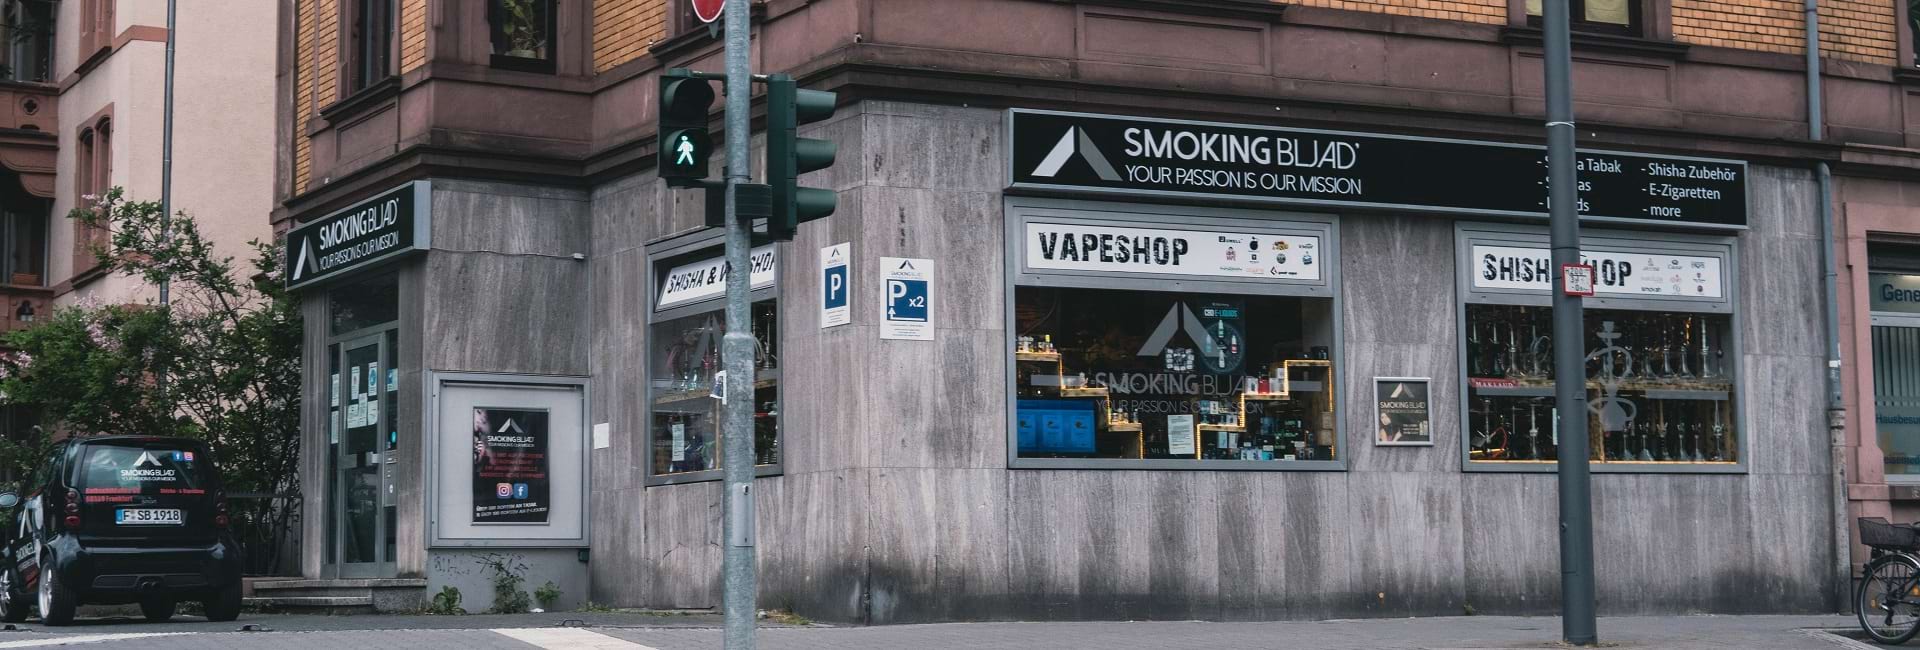 Smoking Bljad Shisha Shop in Frankfurt am Main